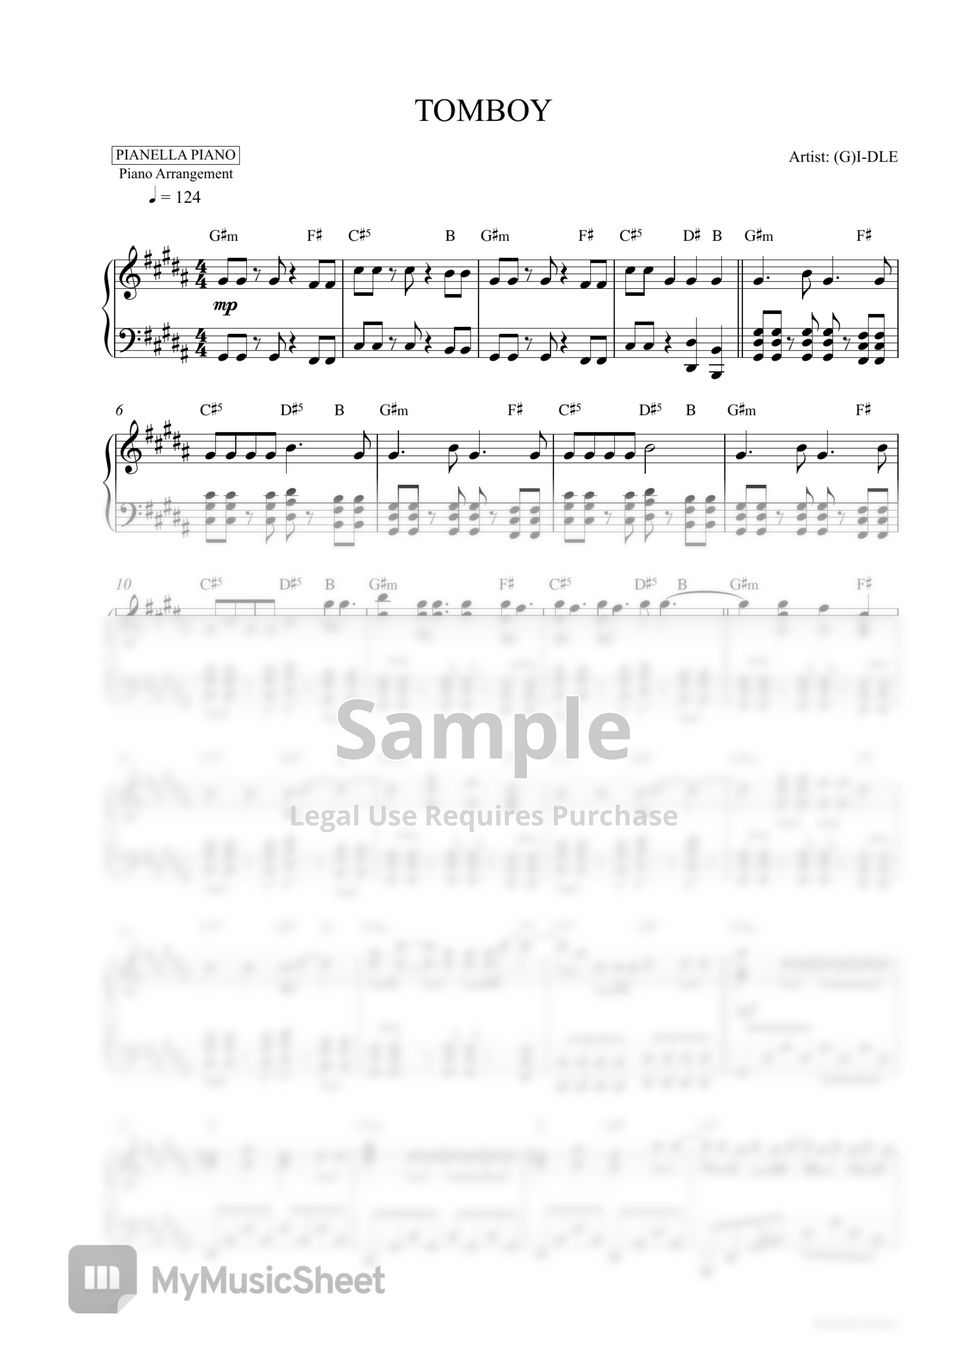 (G)I-DLE - TOMBOY (Piano Sheet) by Pianella Piano